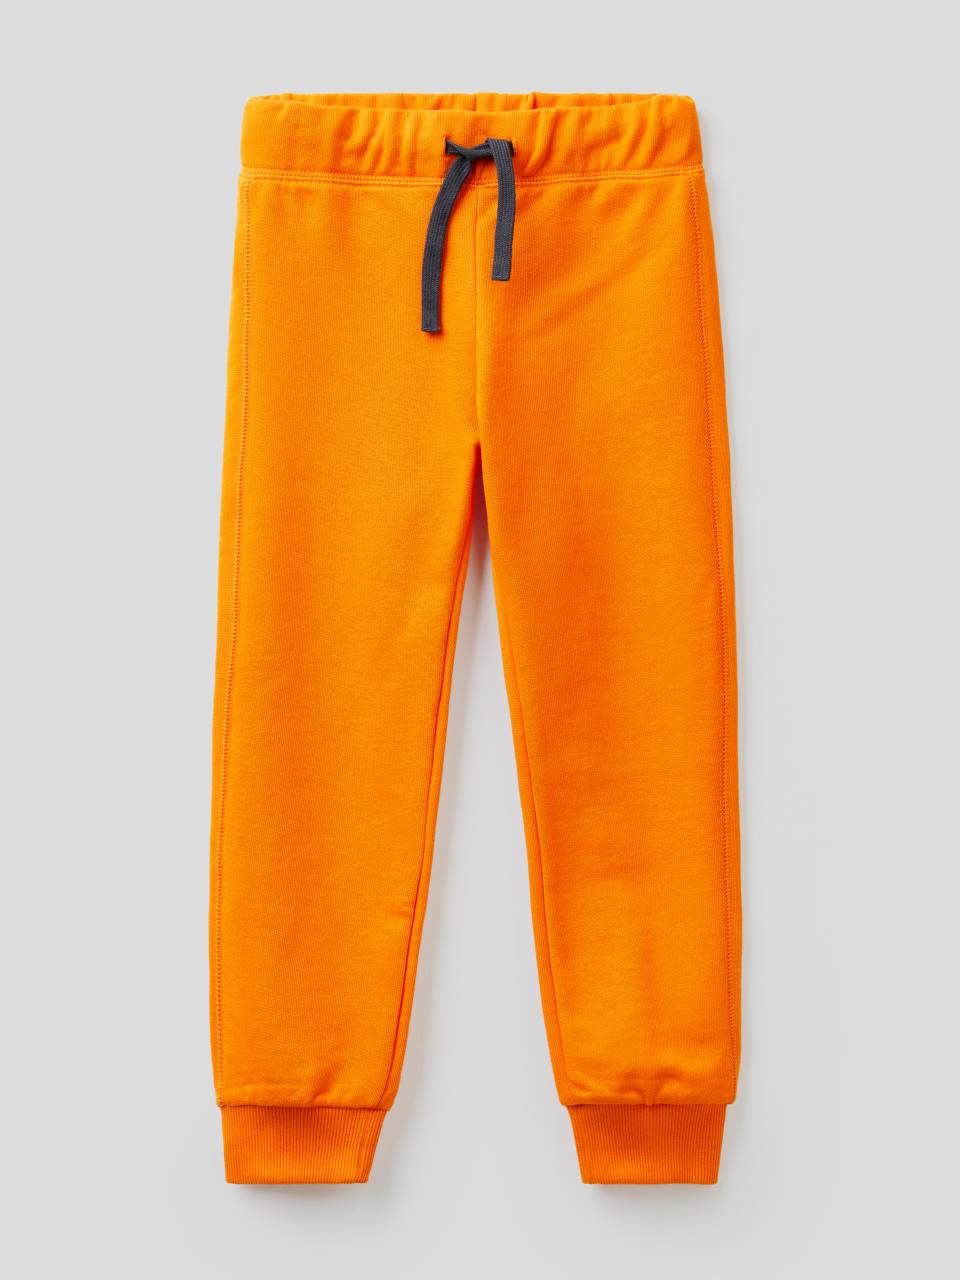 Pantalón naranja de felpa de 100 % algodón - Naranja